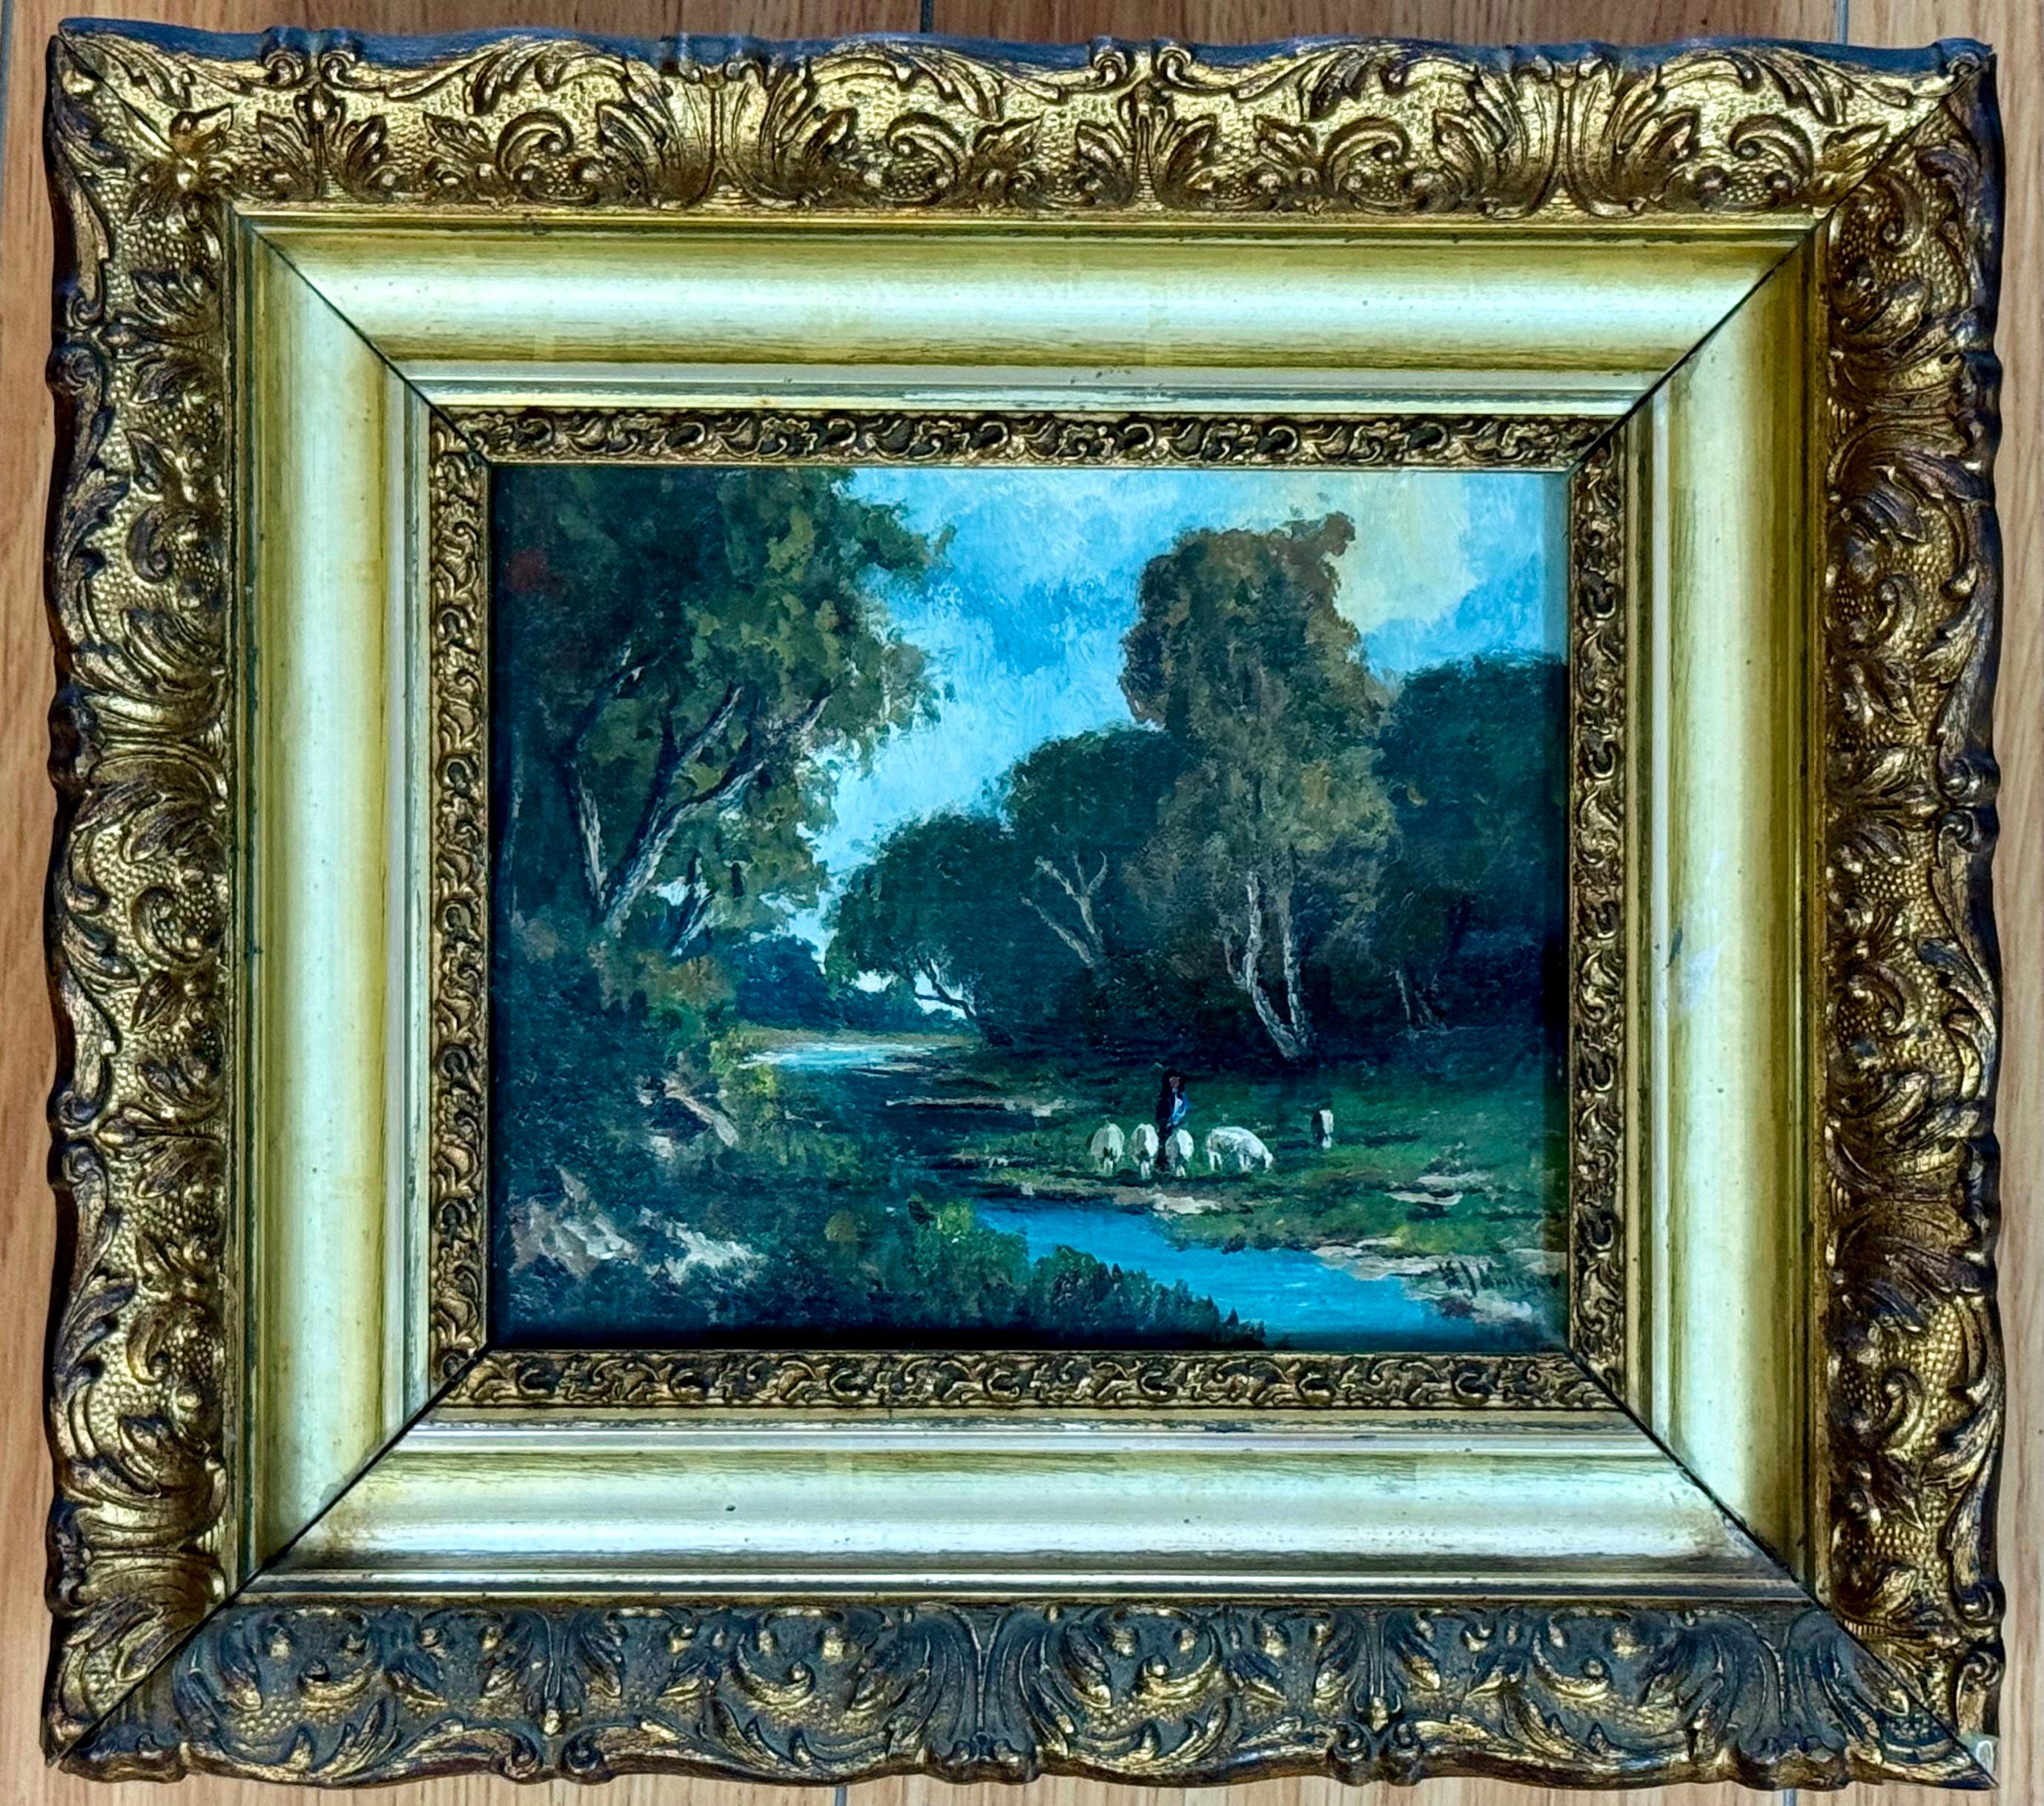 H.J. Krueger (1890-1910) Masterfully Painted landscape depicting a figure & goats by river. 1908. Oil on board. 6 x 7 I'm framed, 9.25 x 10.5 framed.